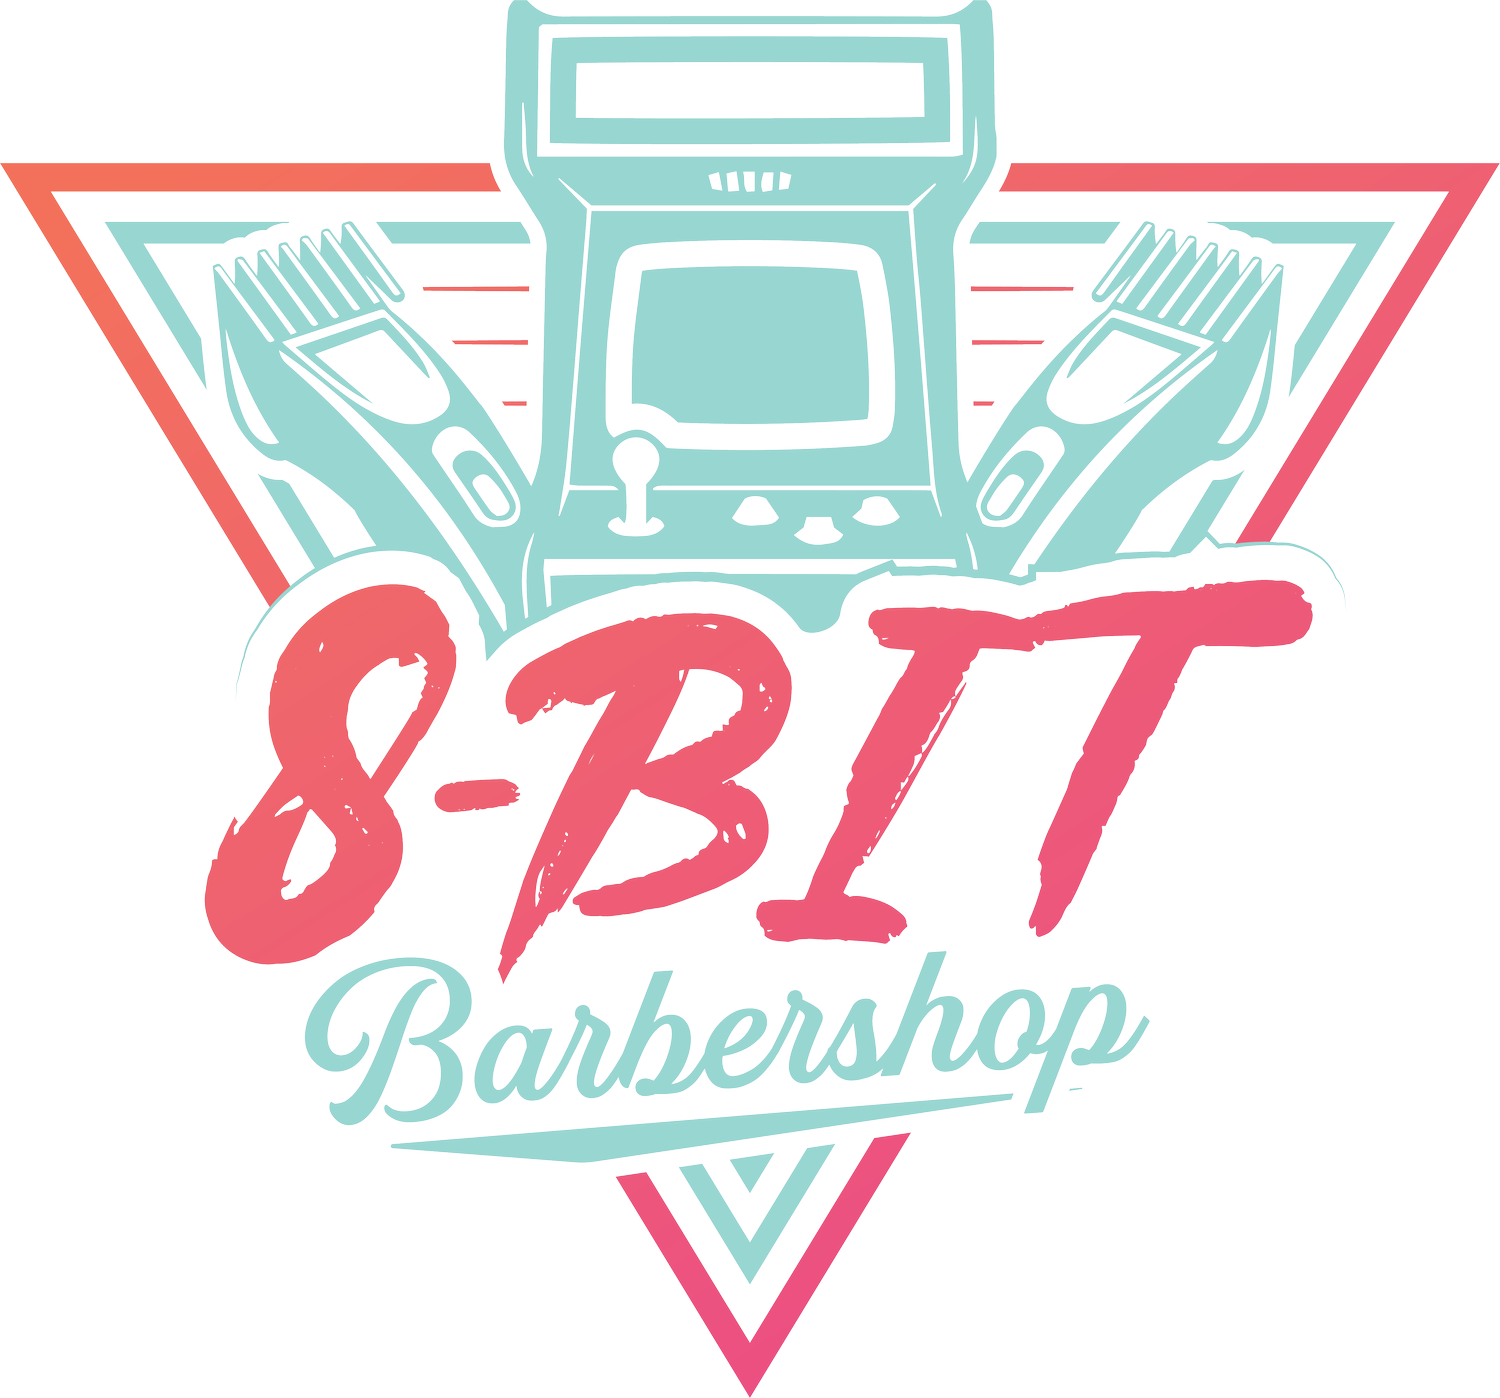 8-Bit Barbershop